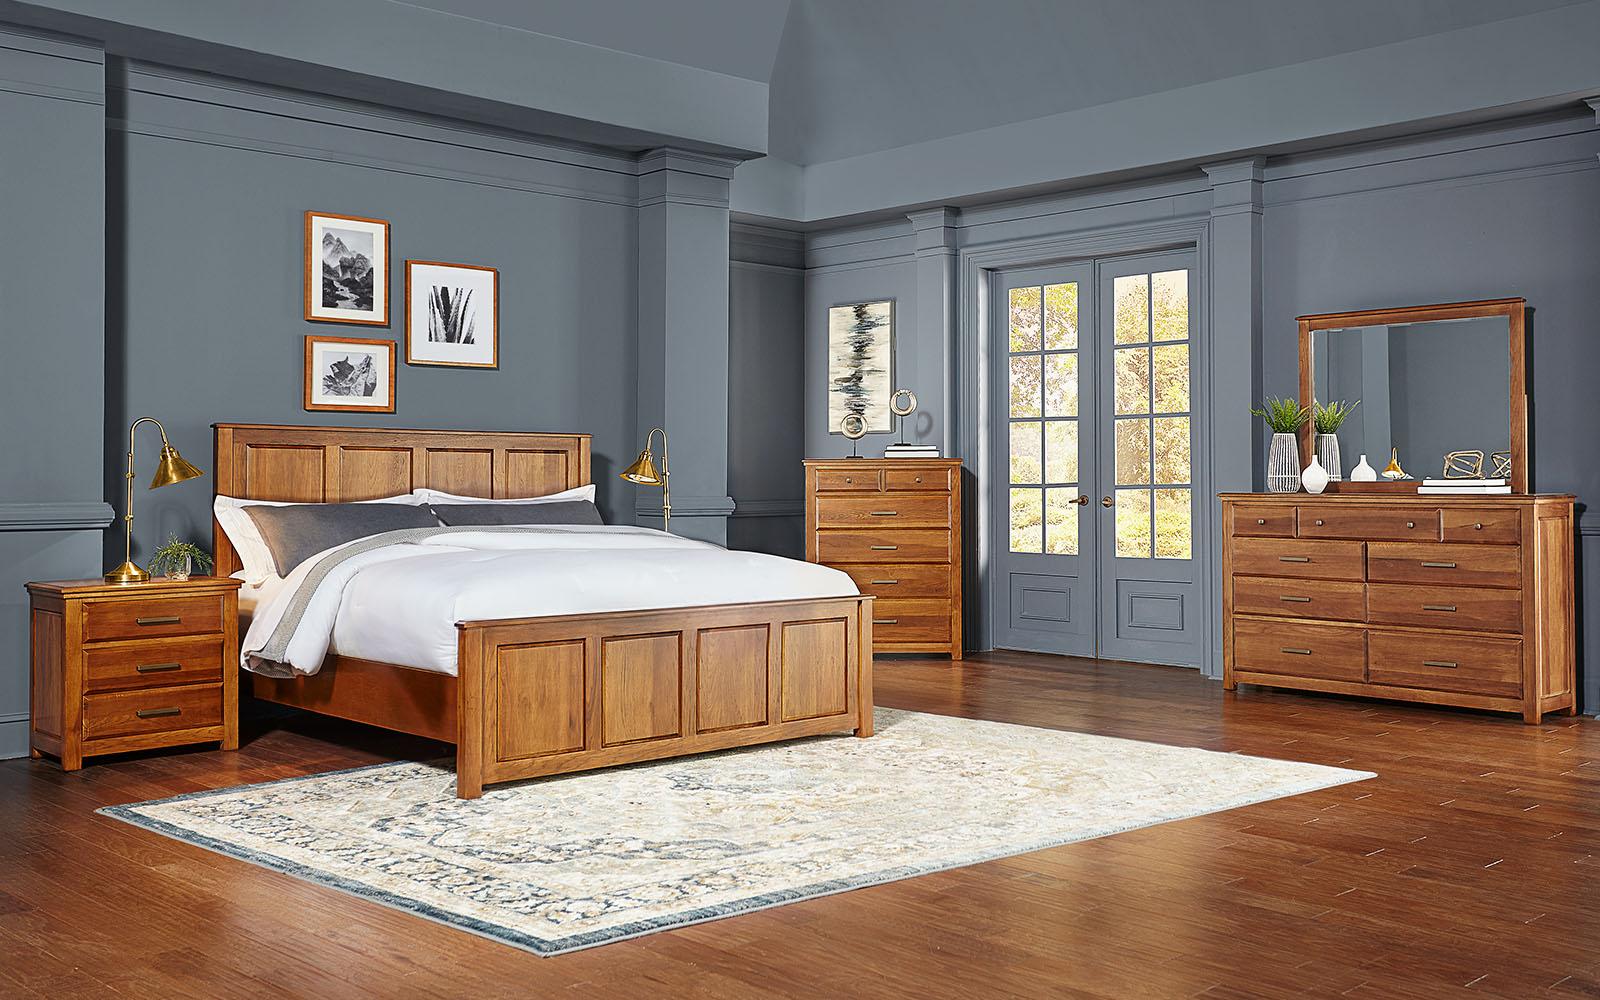 A America Camas Panel Bedroom Set